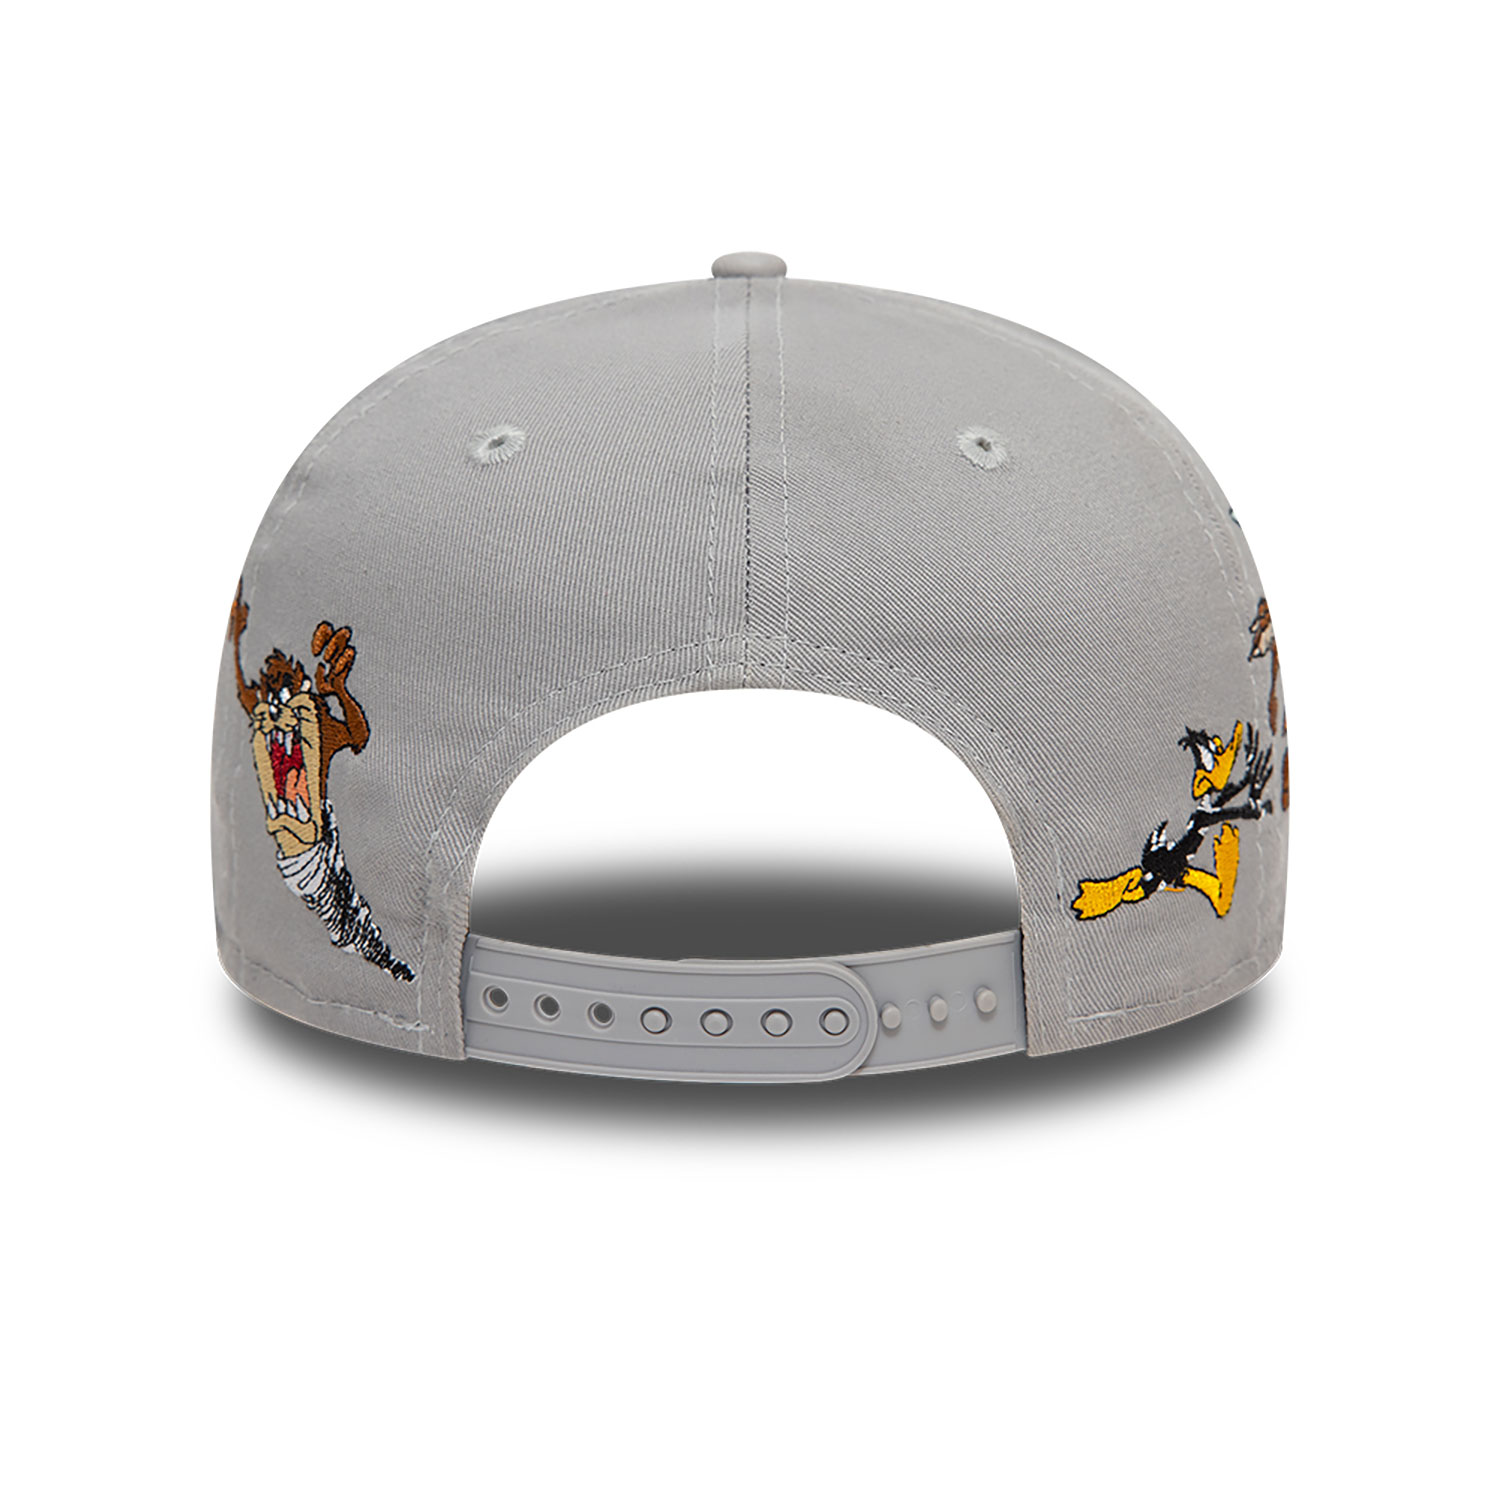 Warner Brothers Shield Logo Bugs Bunny Grey 9FIFTY Snapback Cap